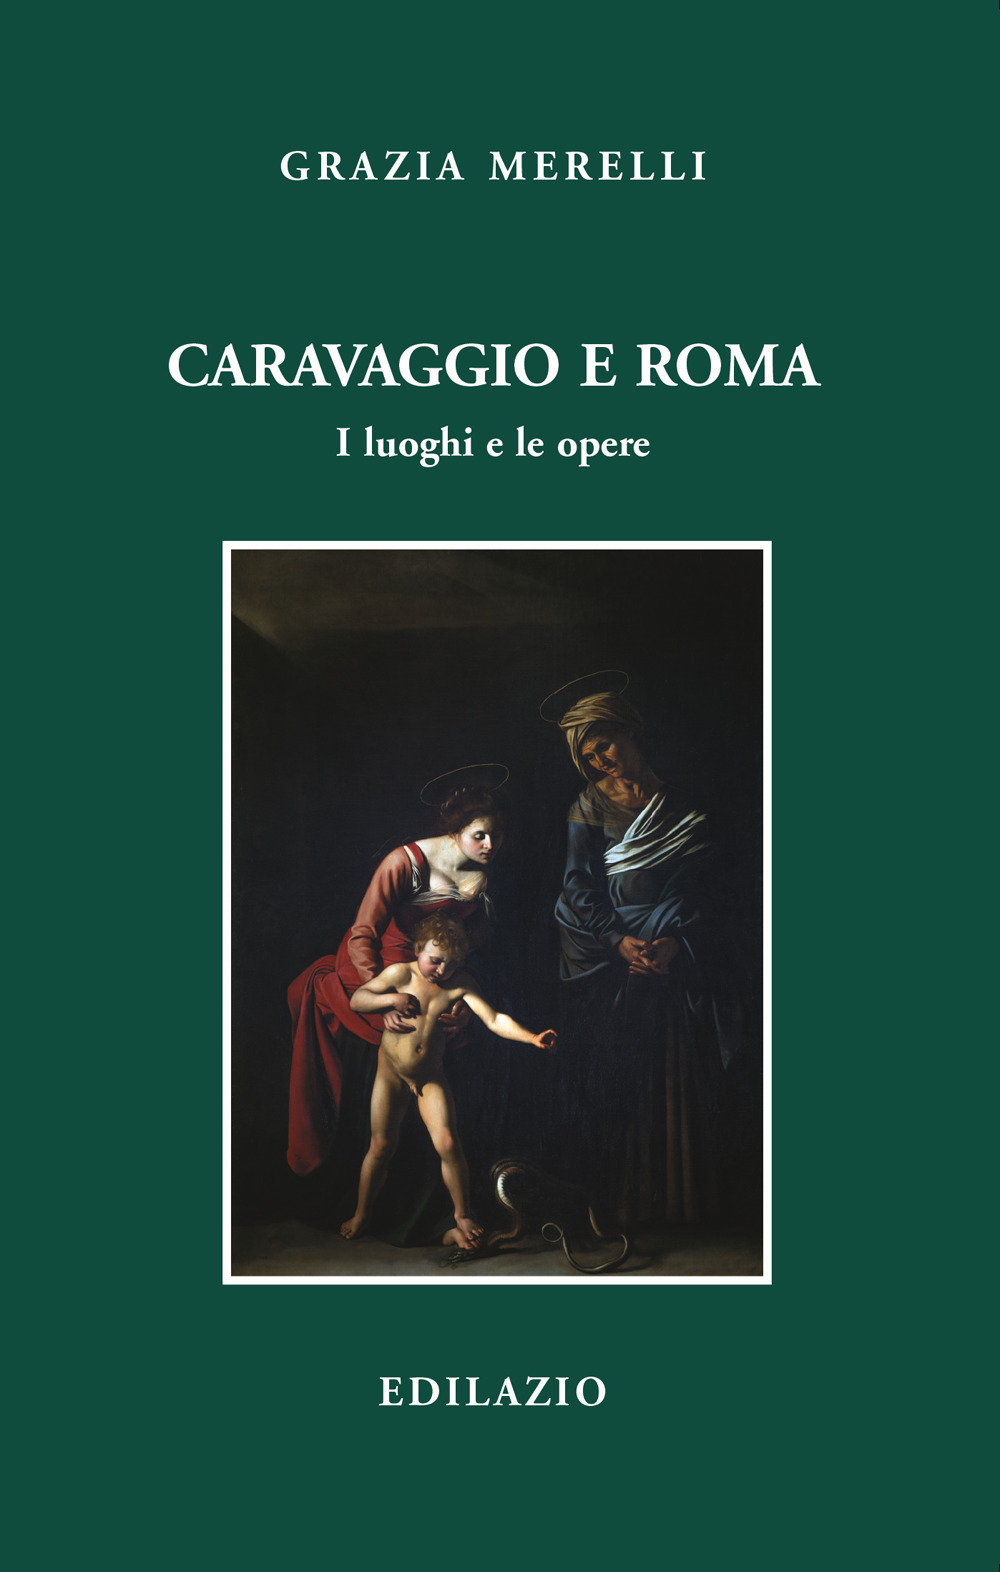 Caravaggio e Roma. I luoghi e le opere